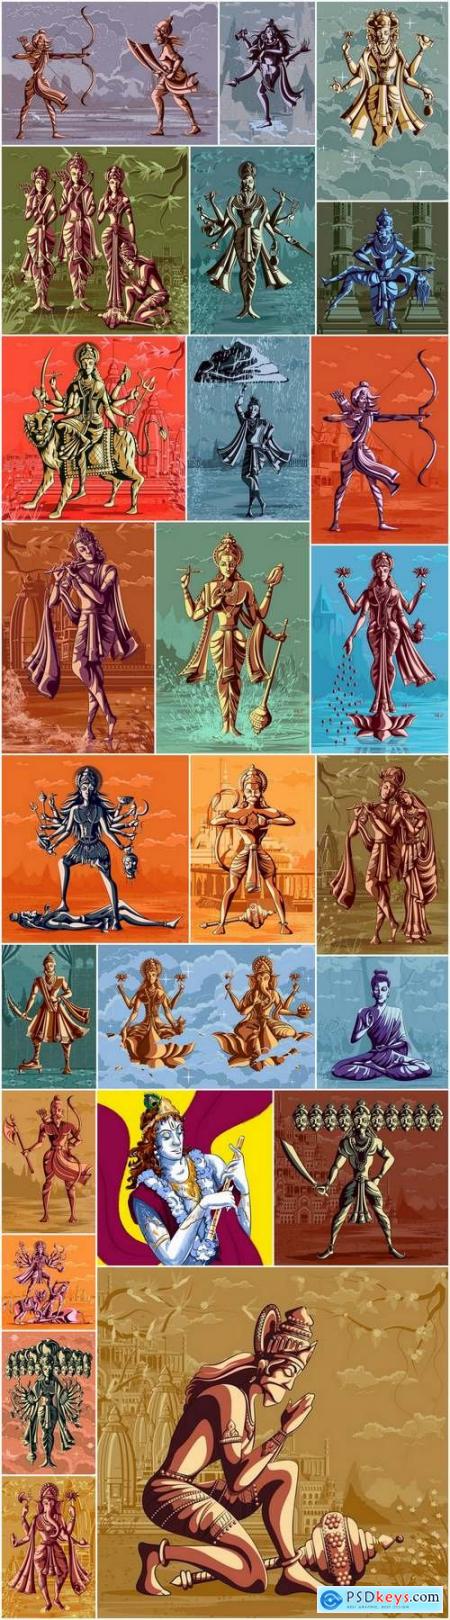 Indian ethnicity god gods vector image 25 EPS